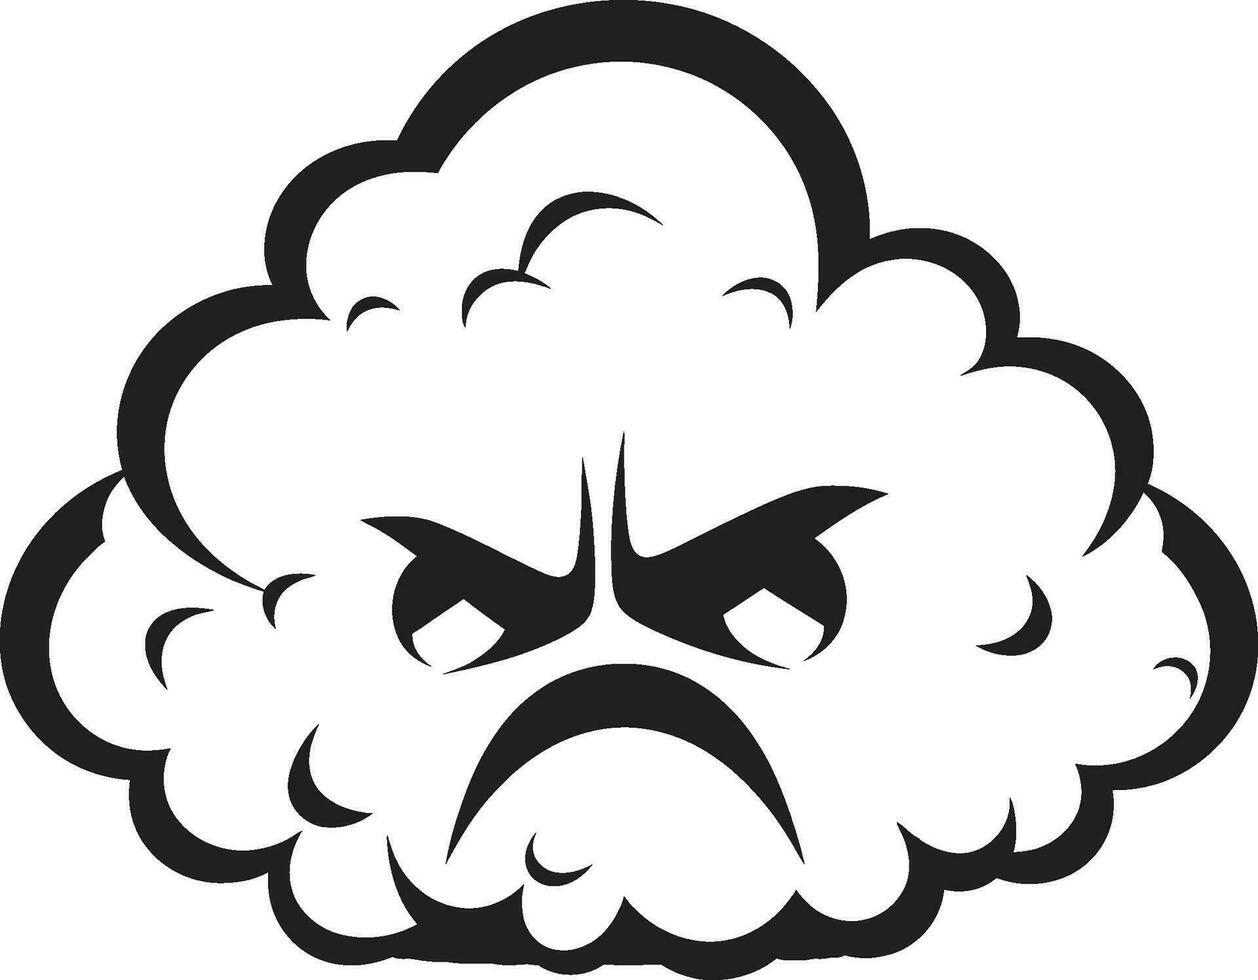 Thunderous Rage Angry Cloud Design Agitated Vapor Vector Angry Cloud Emblem